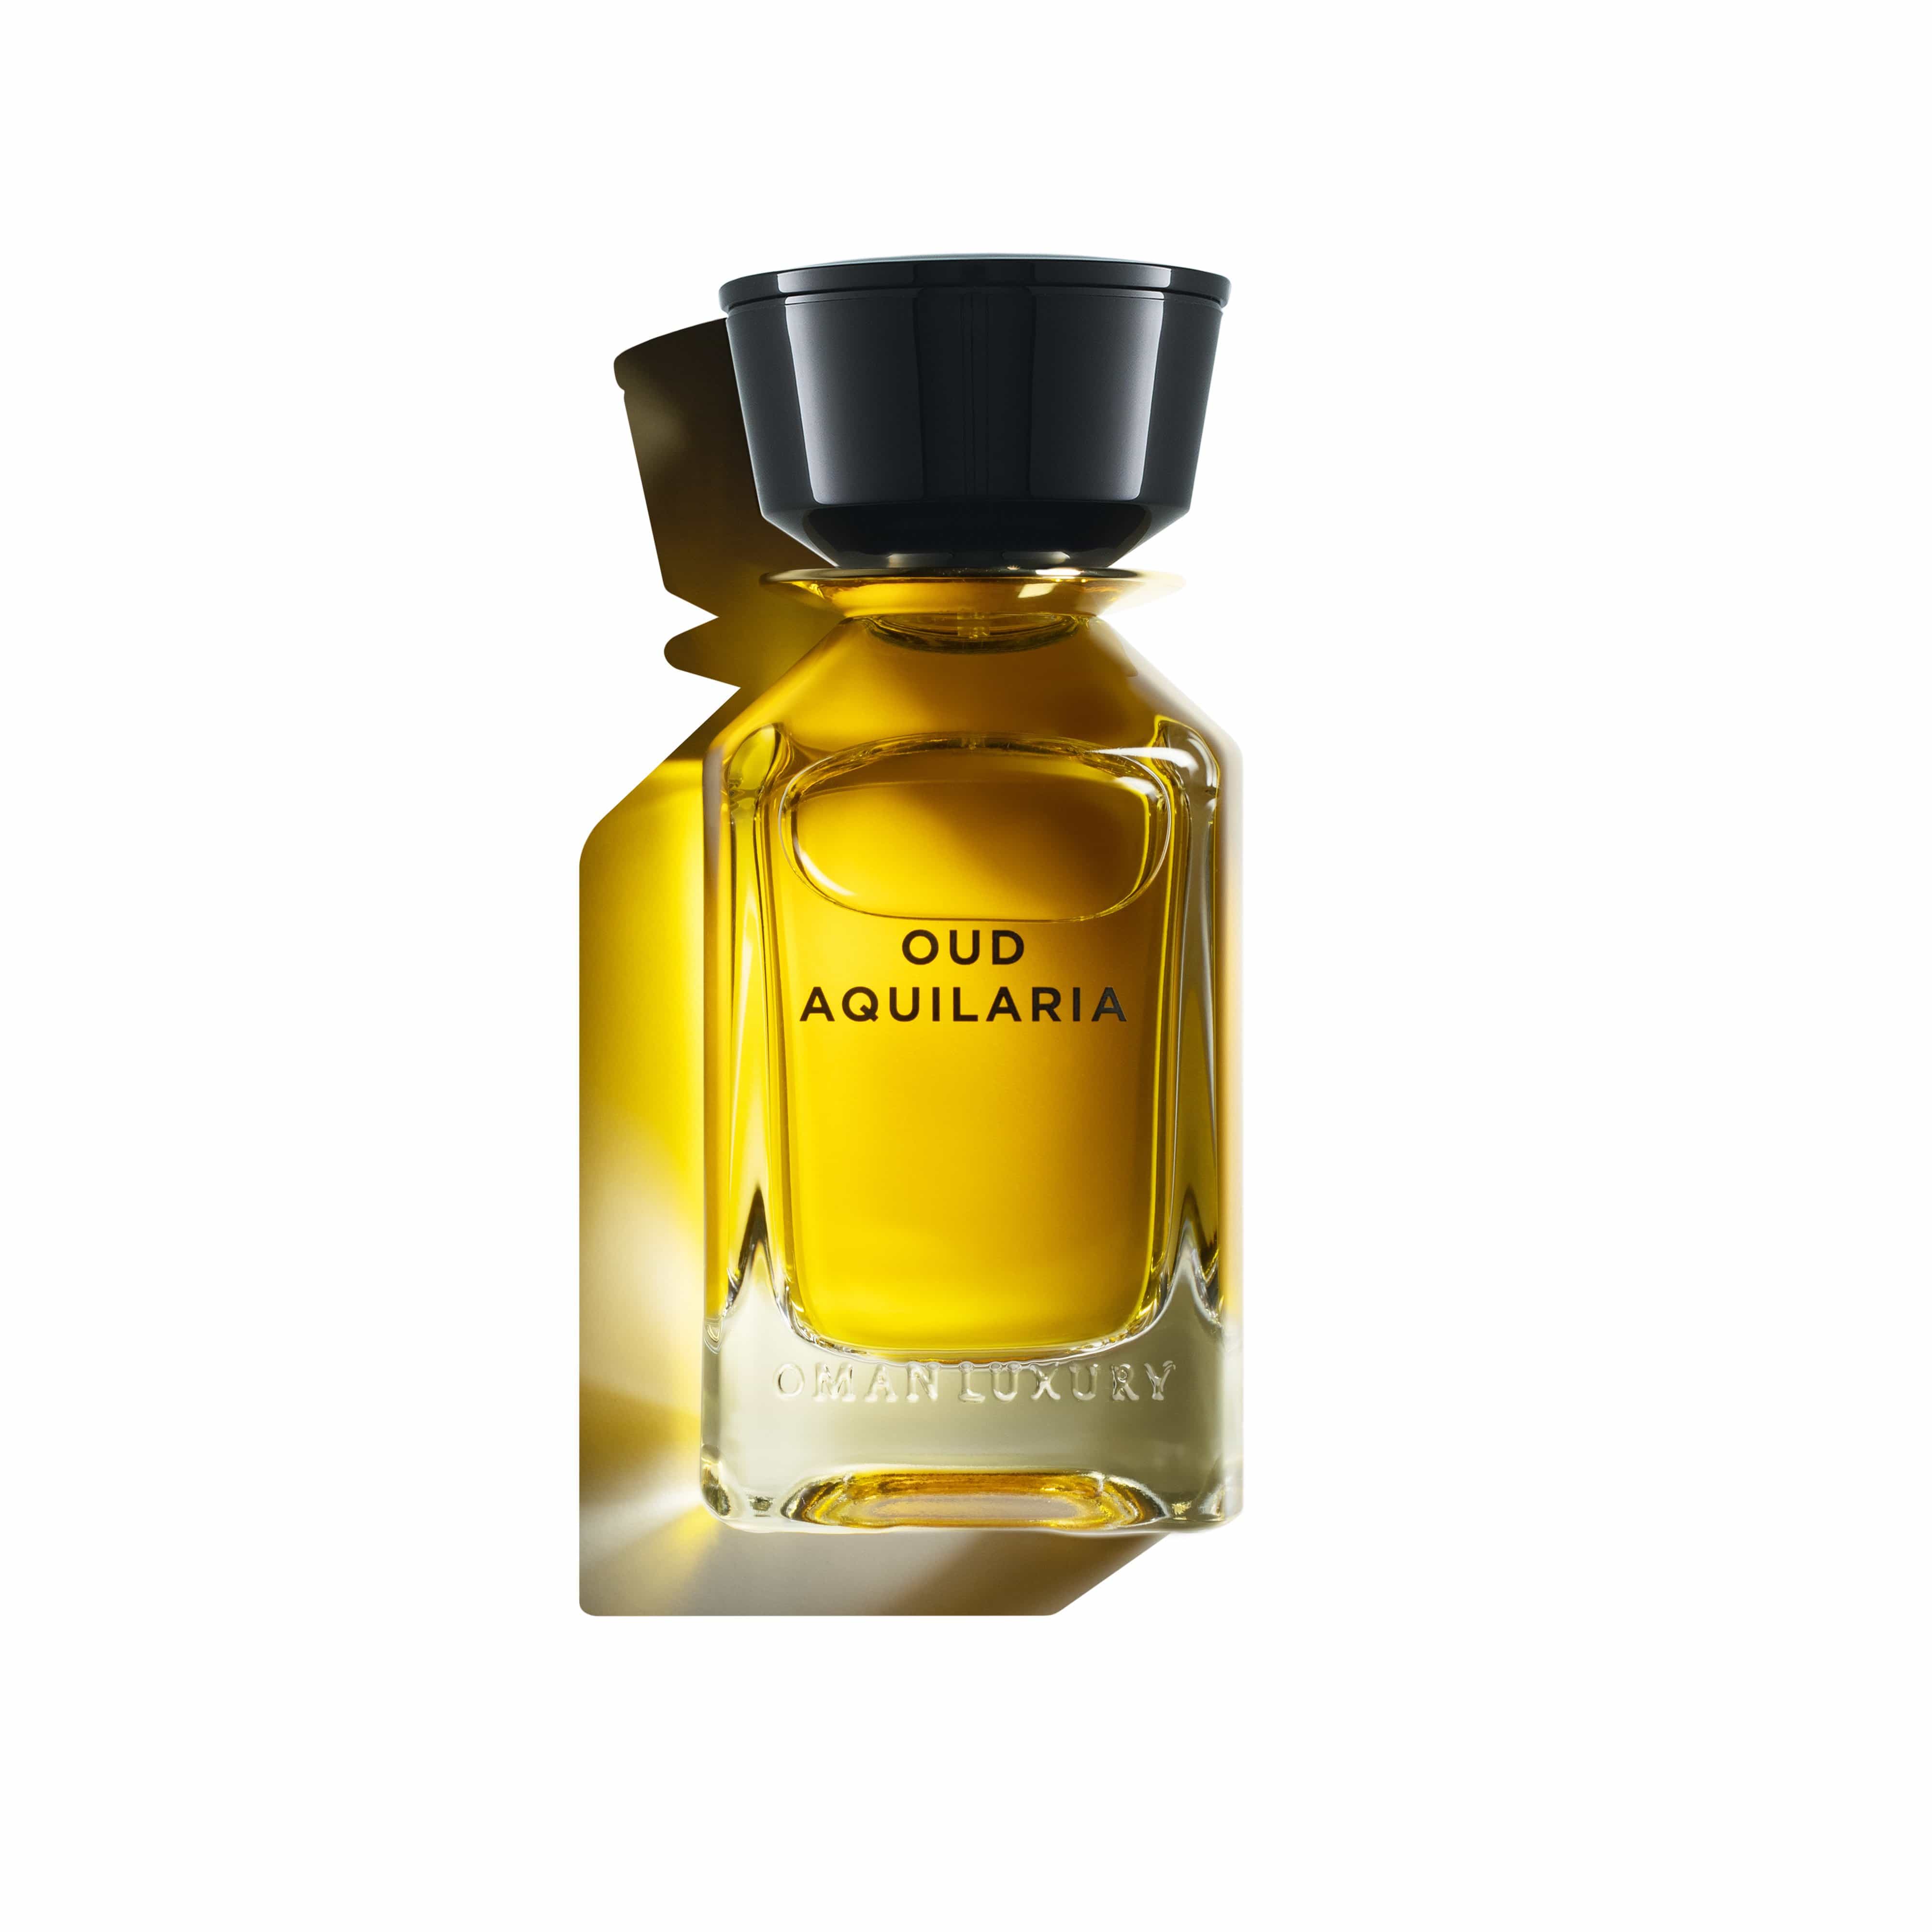 Oud Aquilaria Oman Luxury Eau de parfum